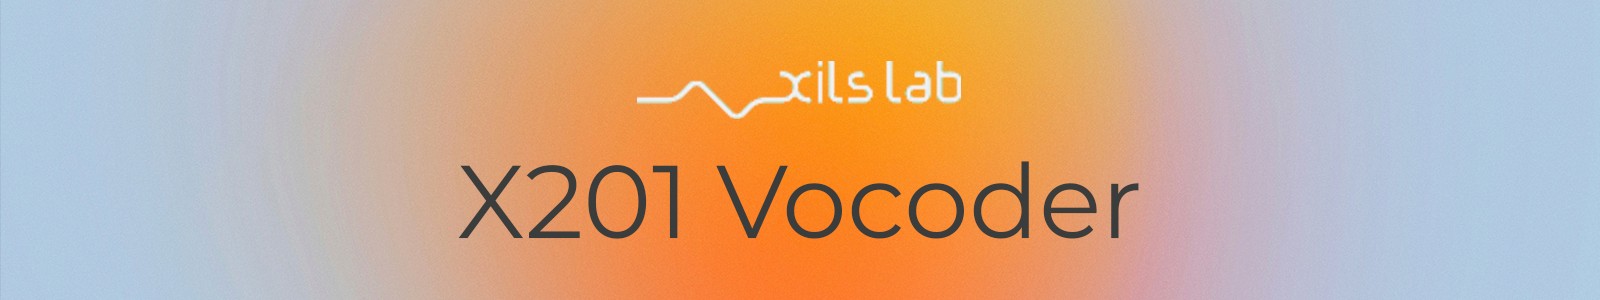 XILS-lab XILS 201 Vocoder